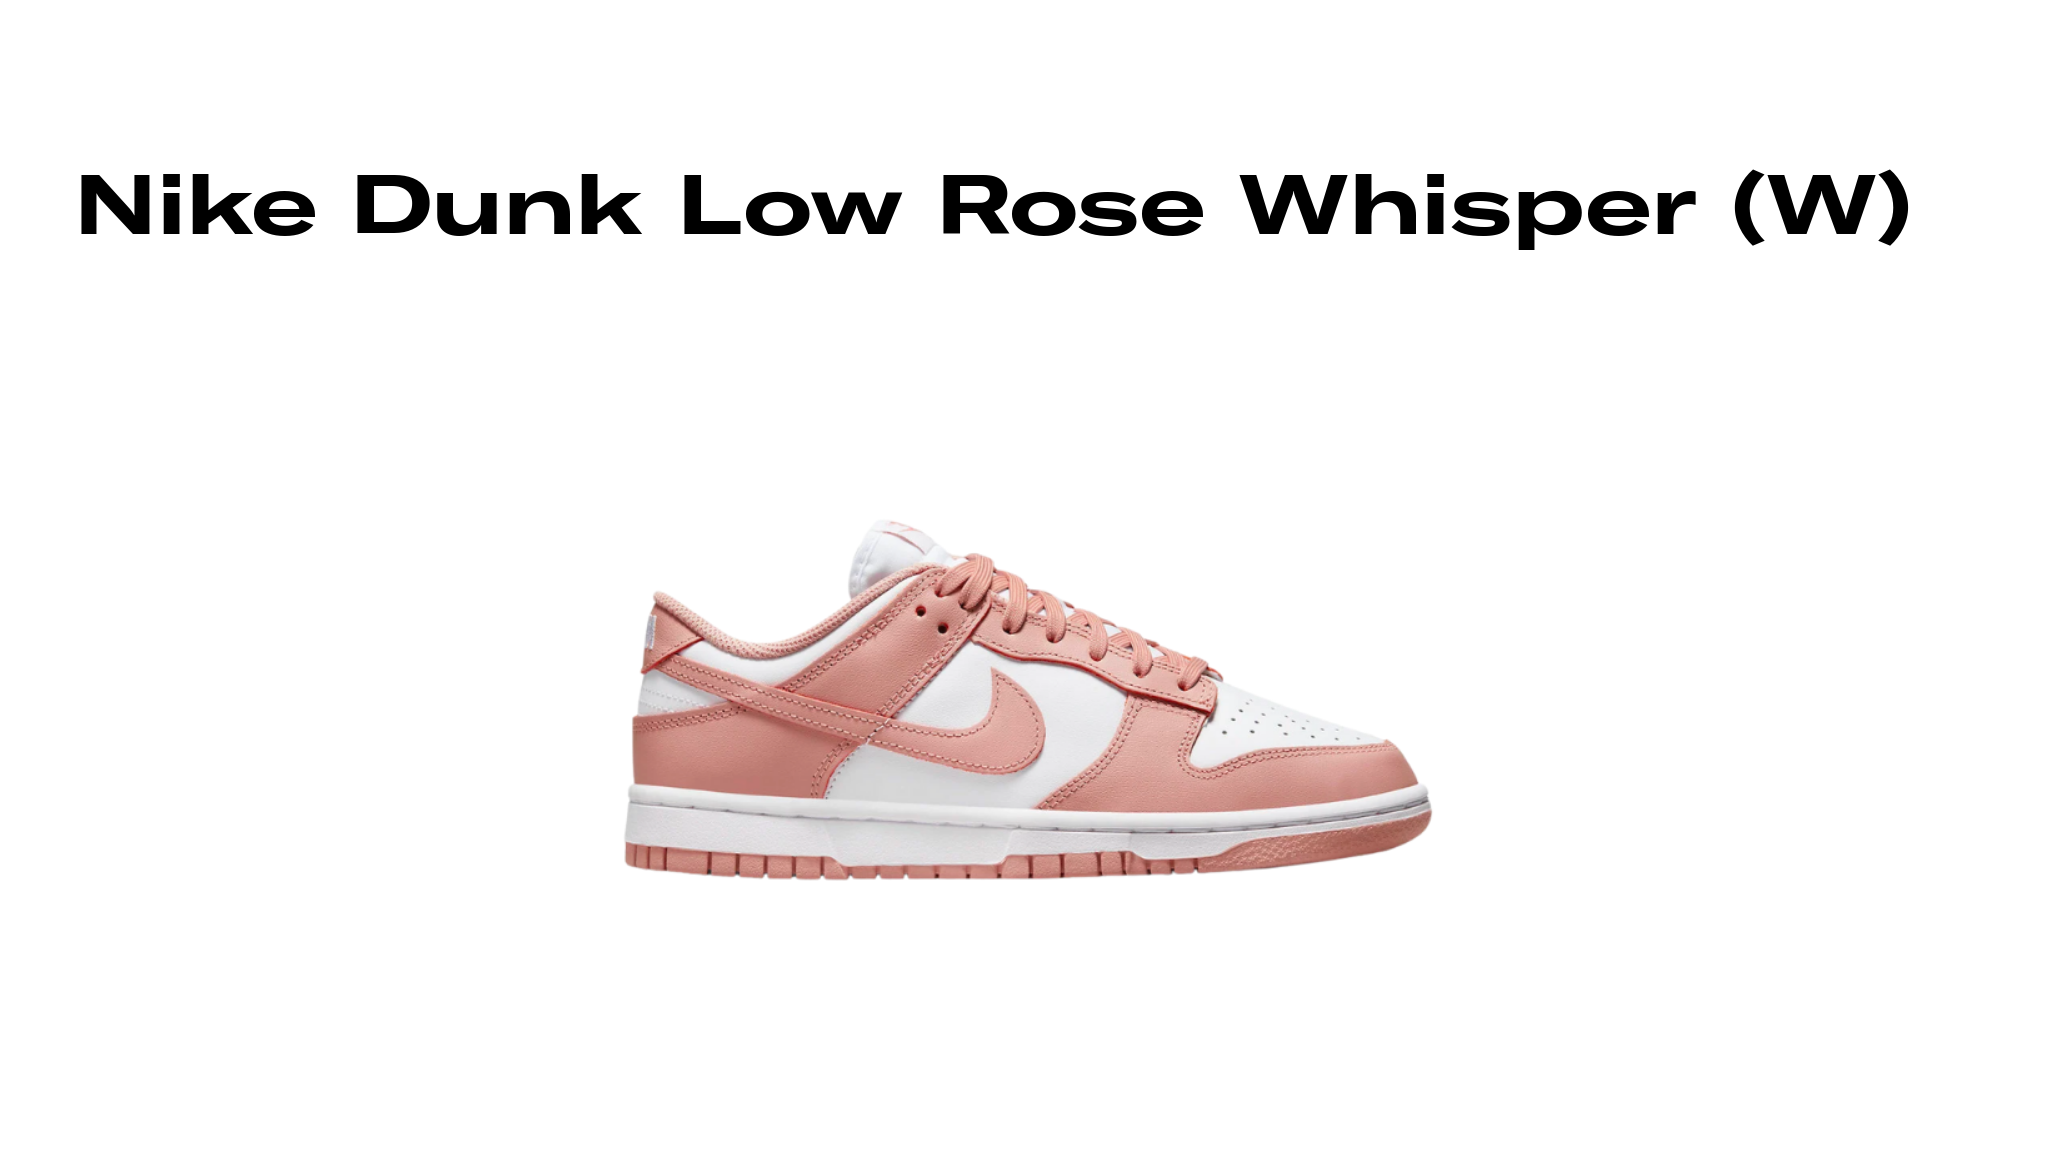 Nike Dunk Low Rose Whisper (W), Raffles and Release Date Sole Retriever